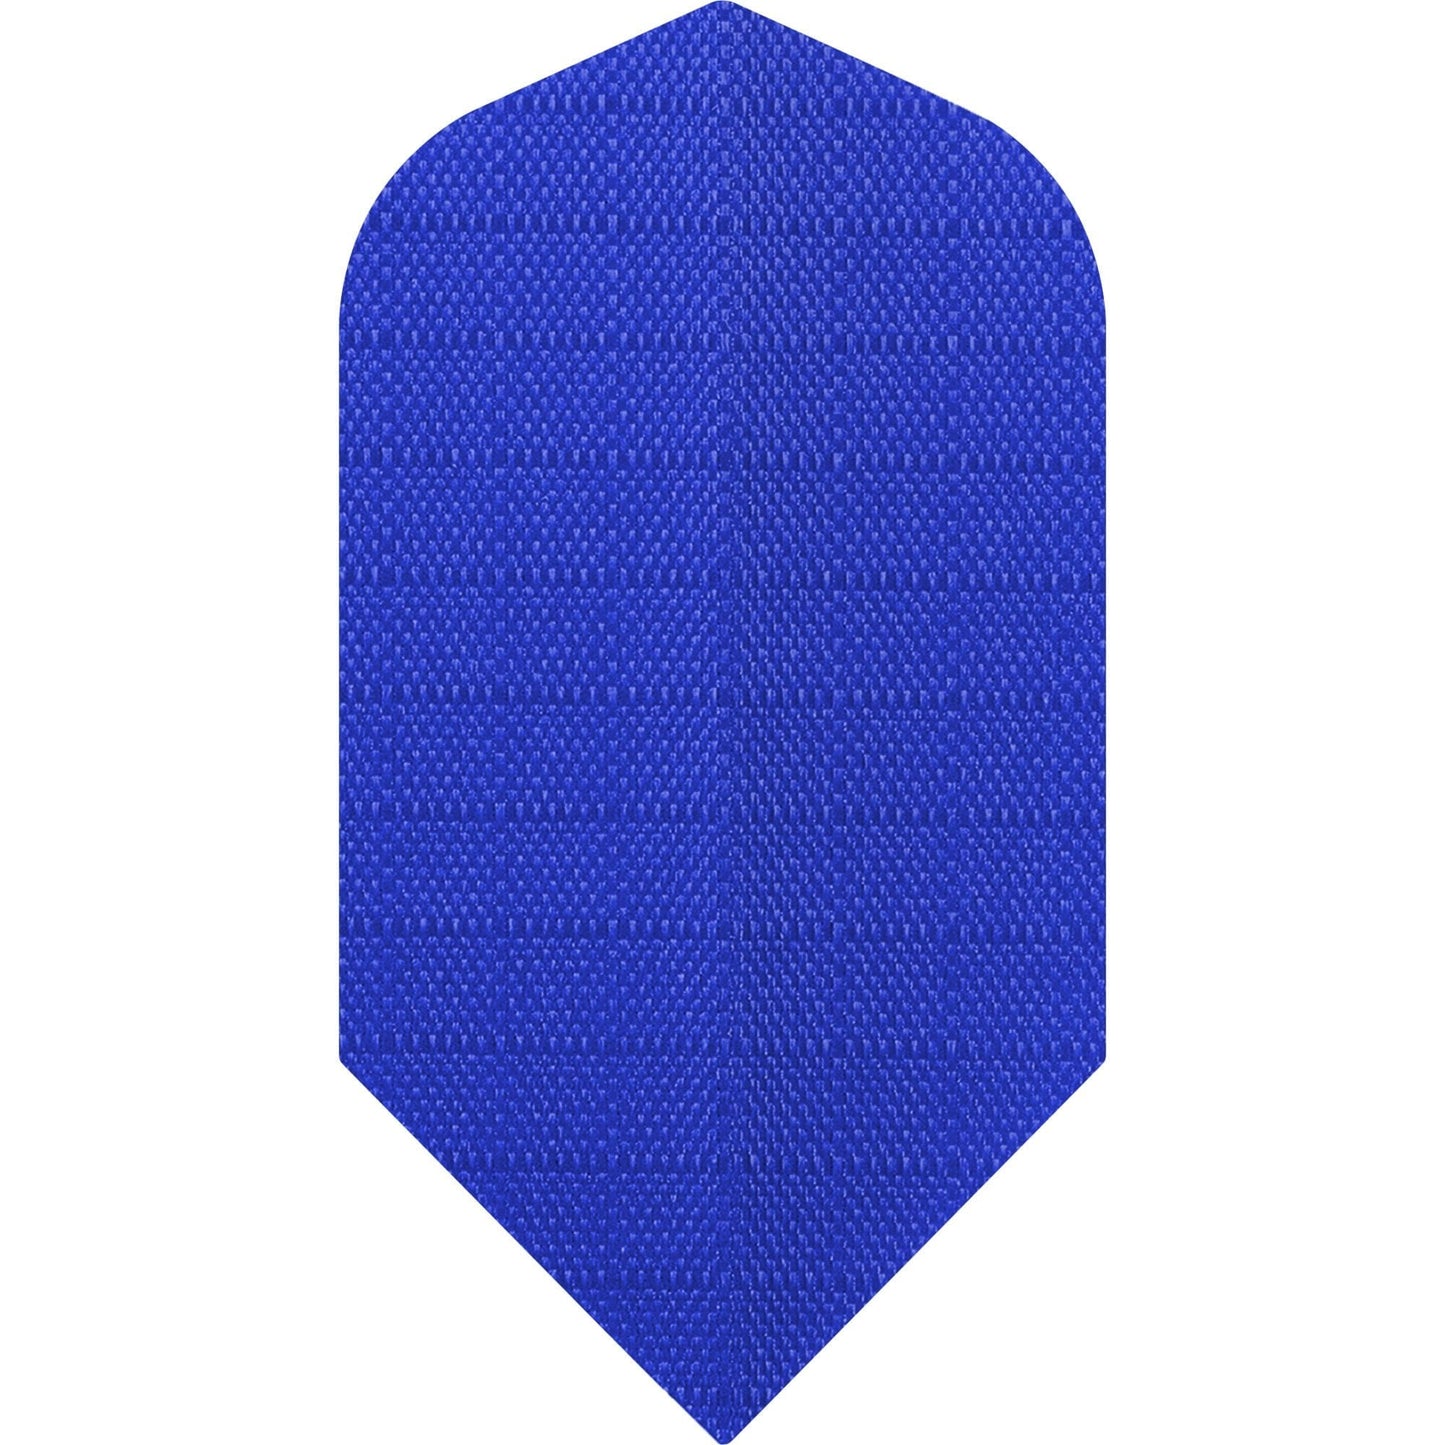 *Designa Dart Flights - Fabric Rip Stop Nylon - Longlife - Slim Blue